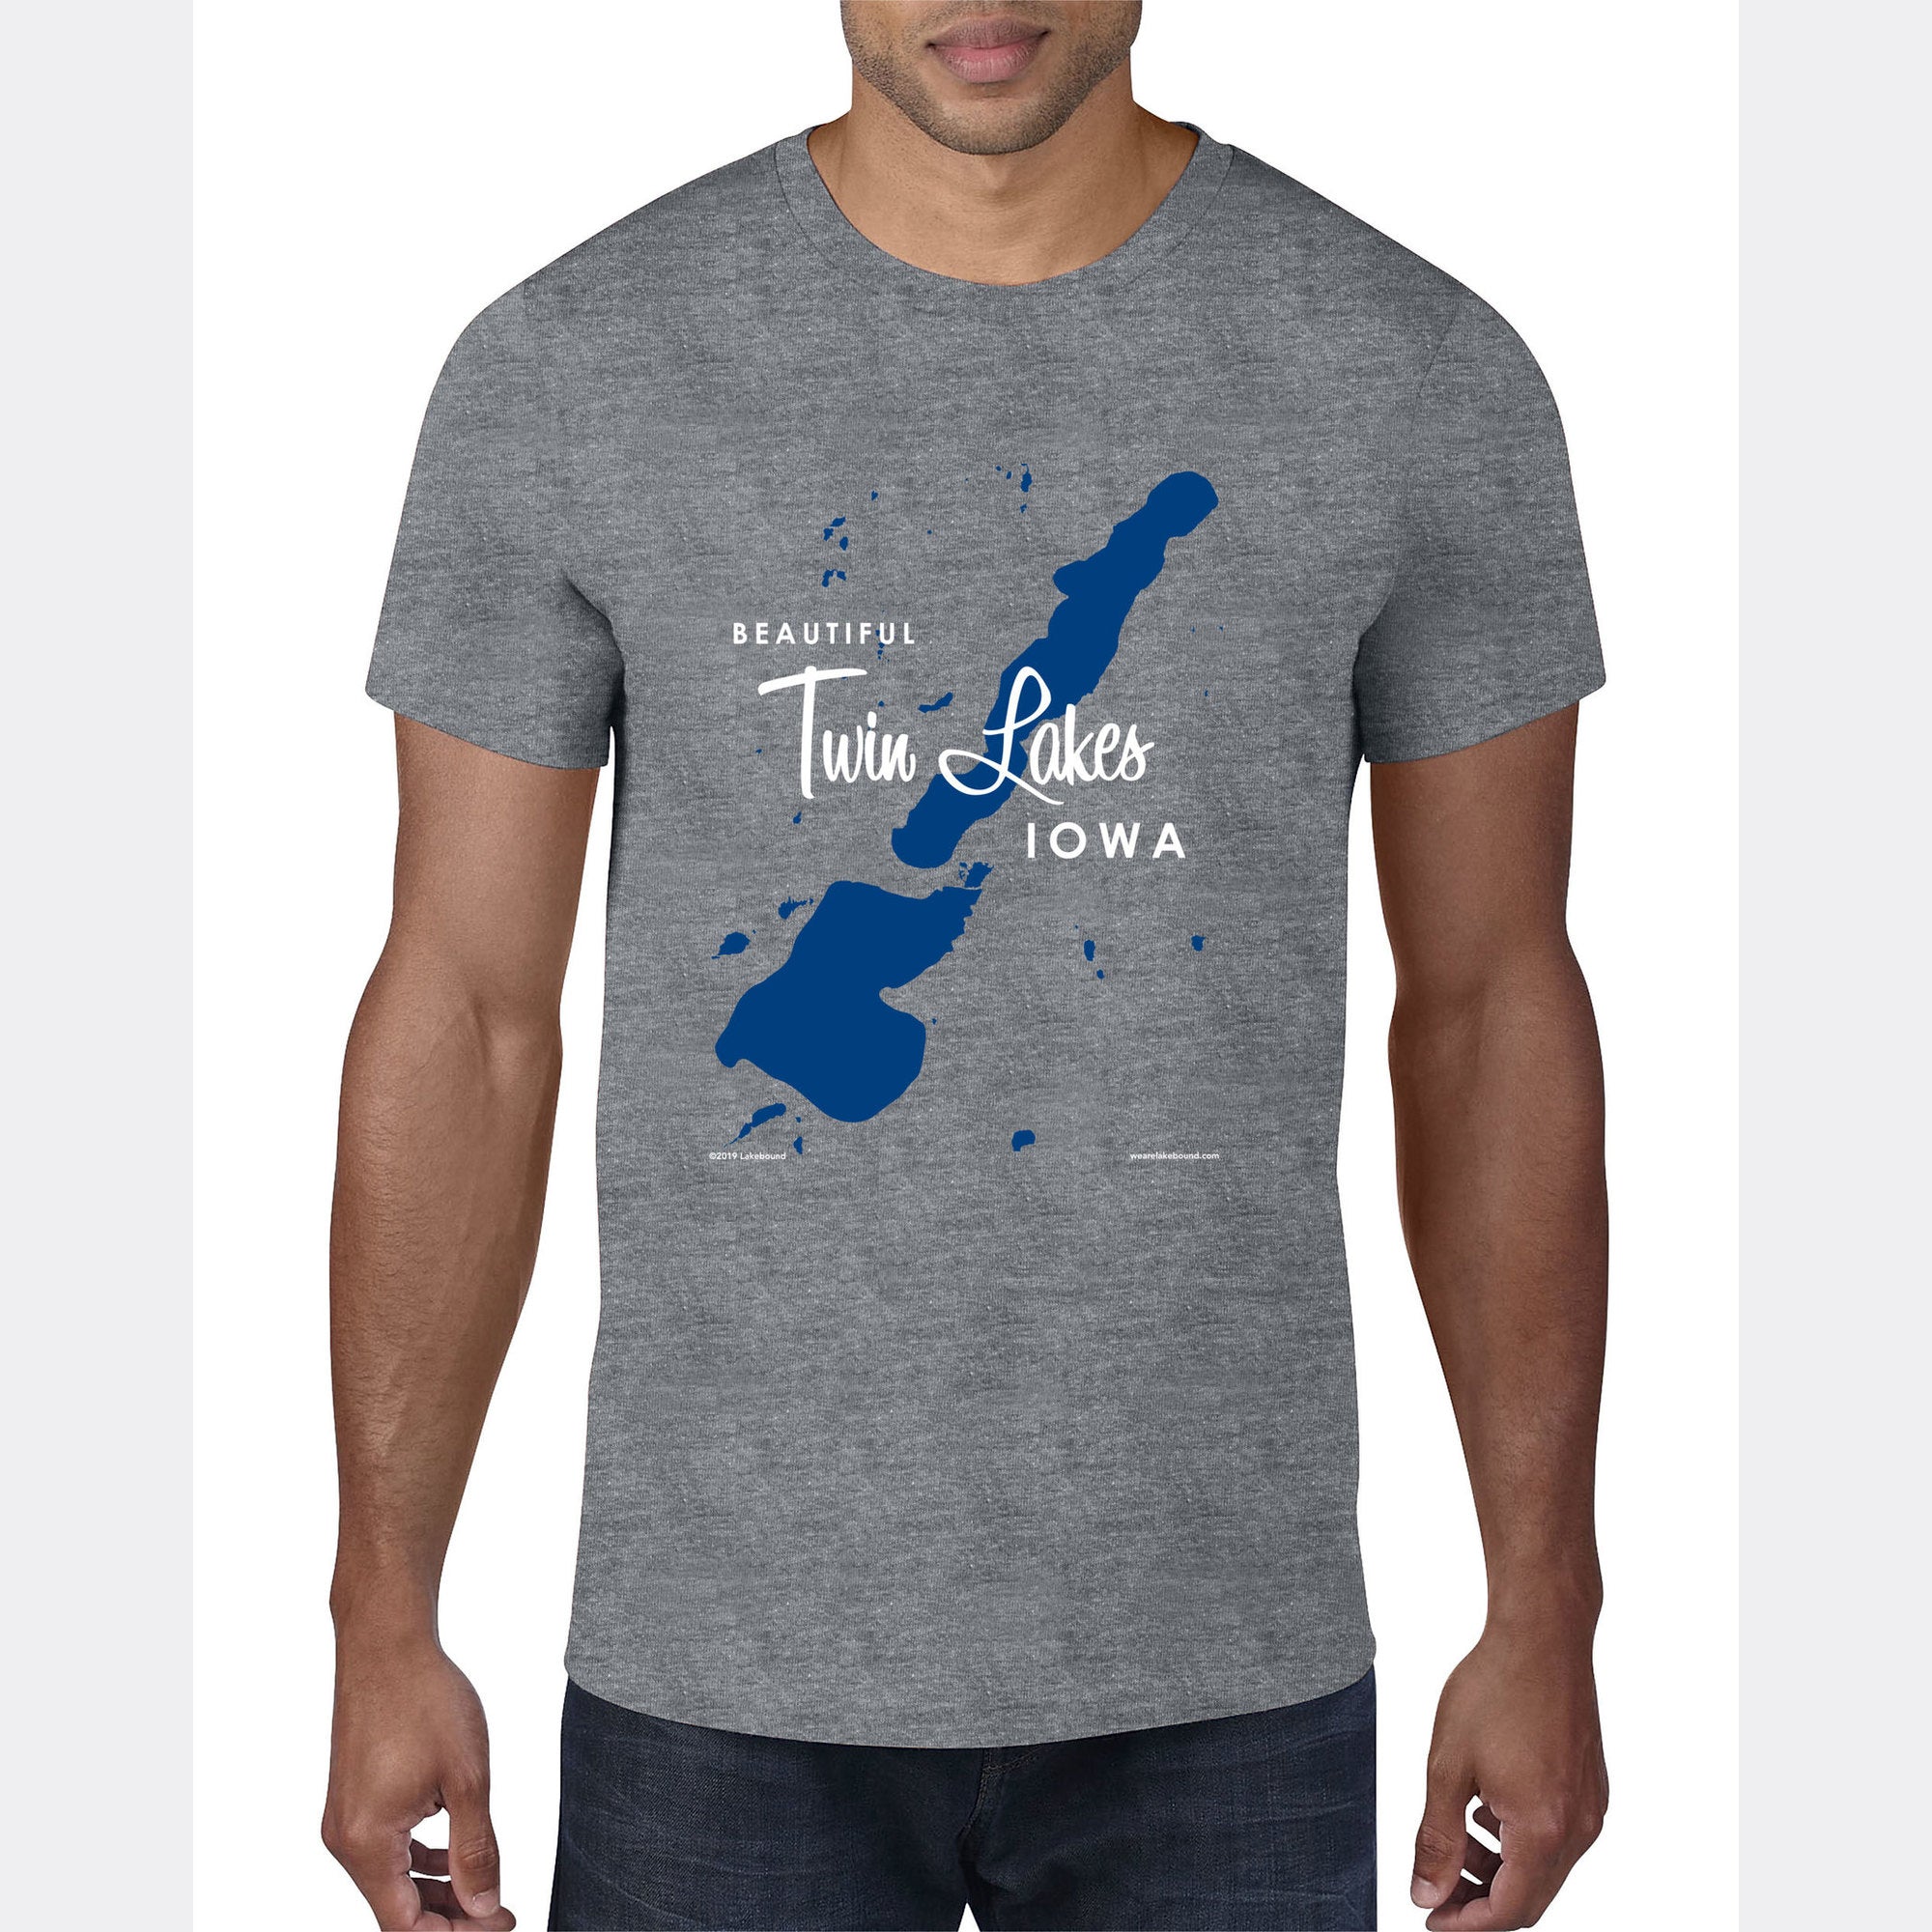 Twin Lakes Iowa, T-Shirt